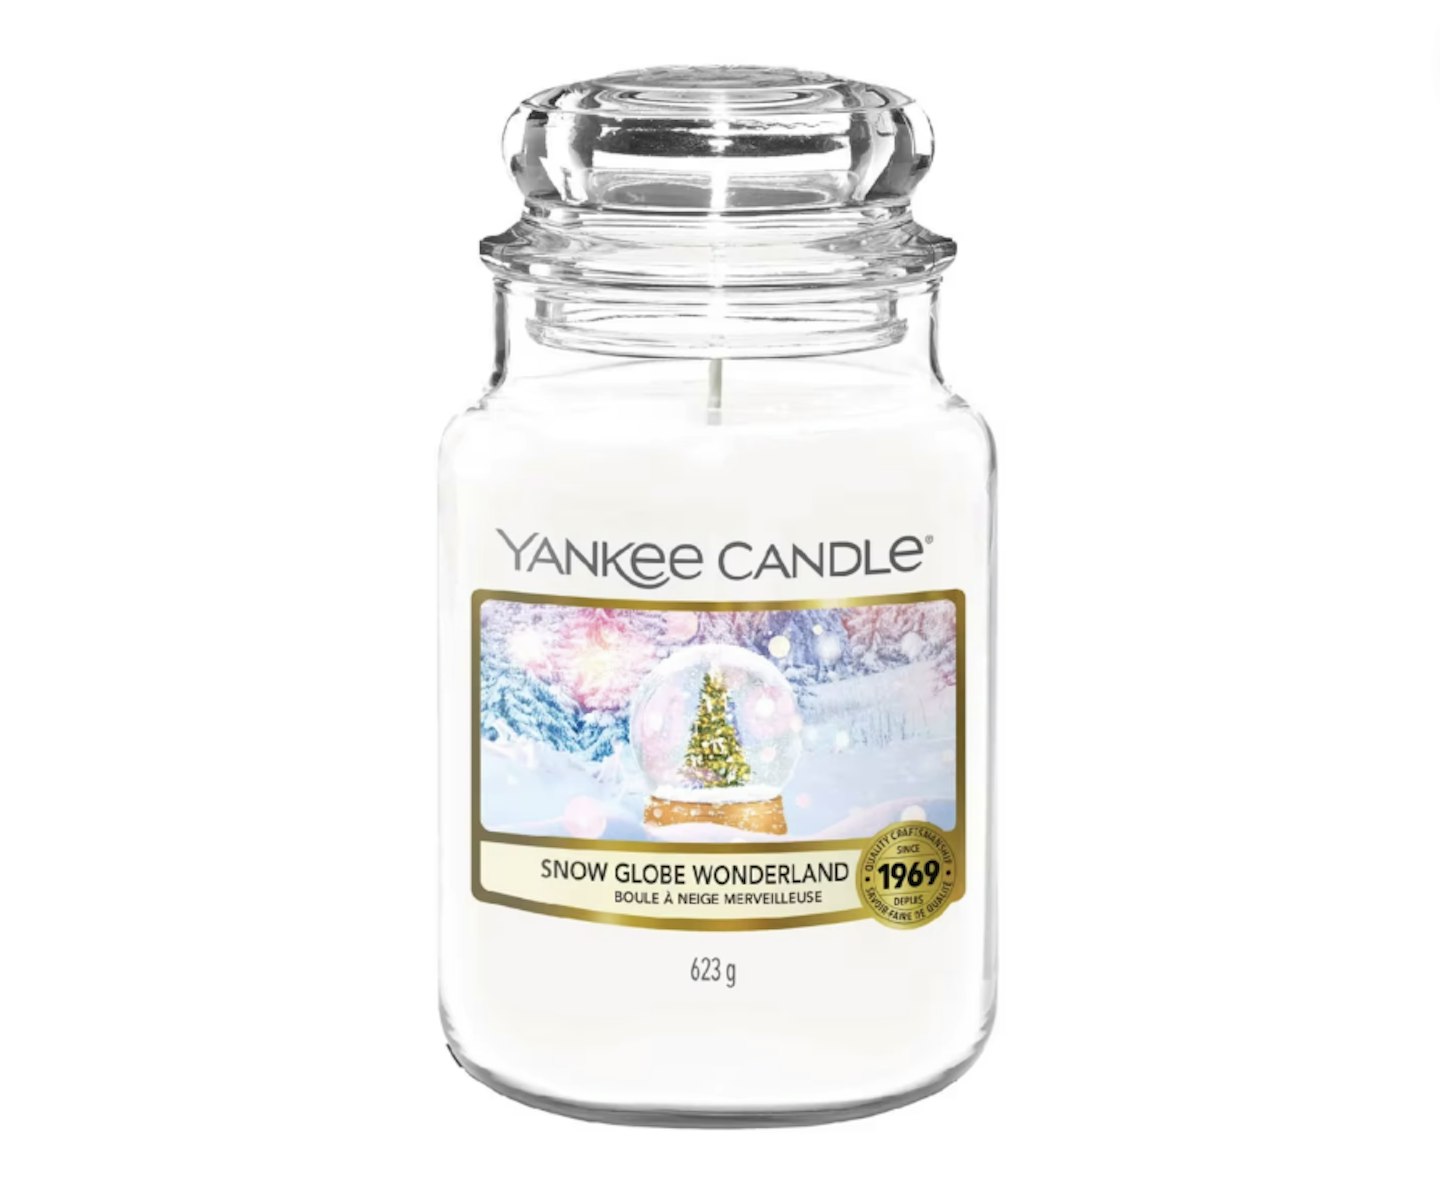 Yankee Candle large jar - Snow Globe Wonderland